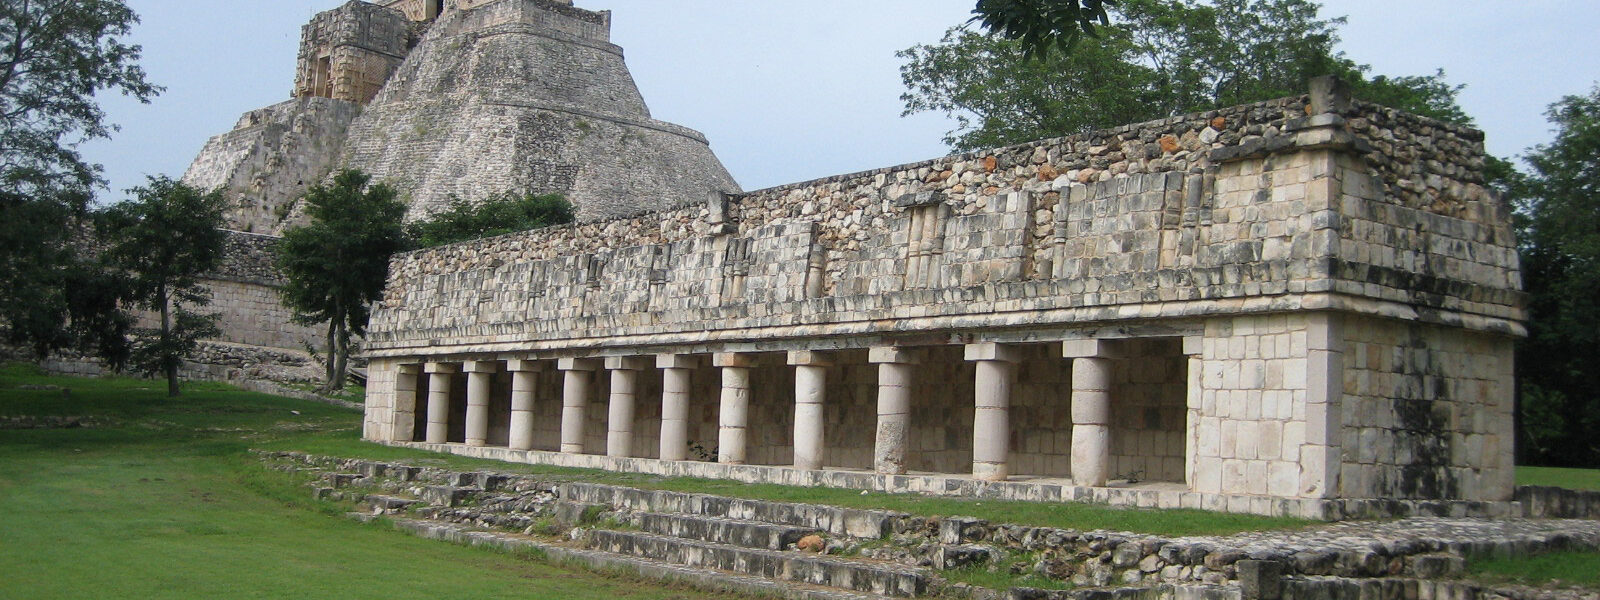 Uxmal - Mexico